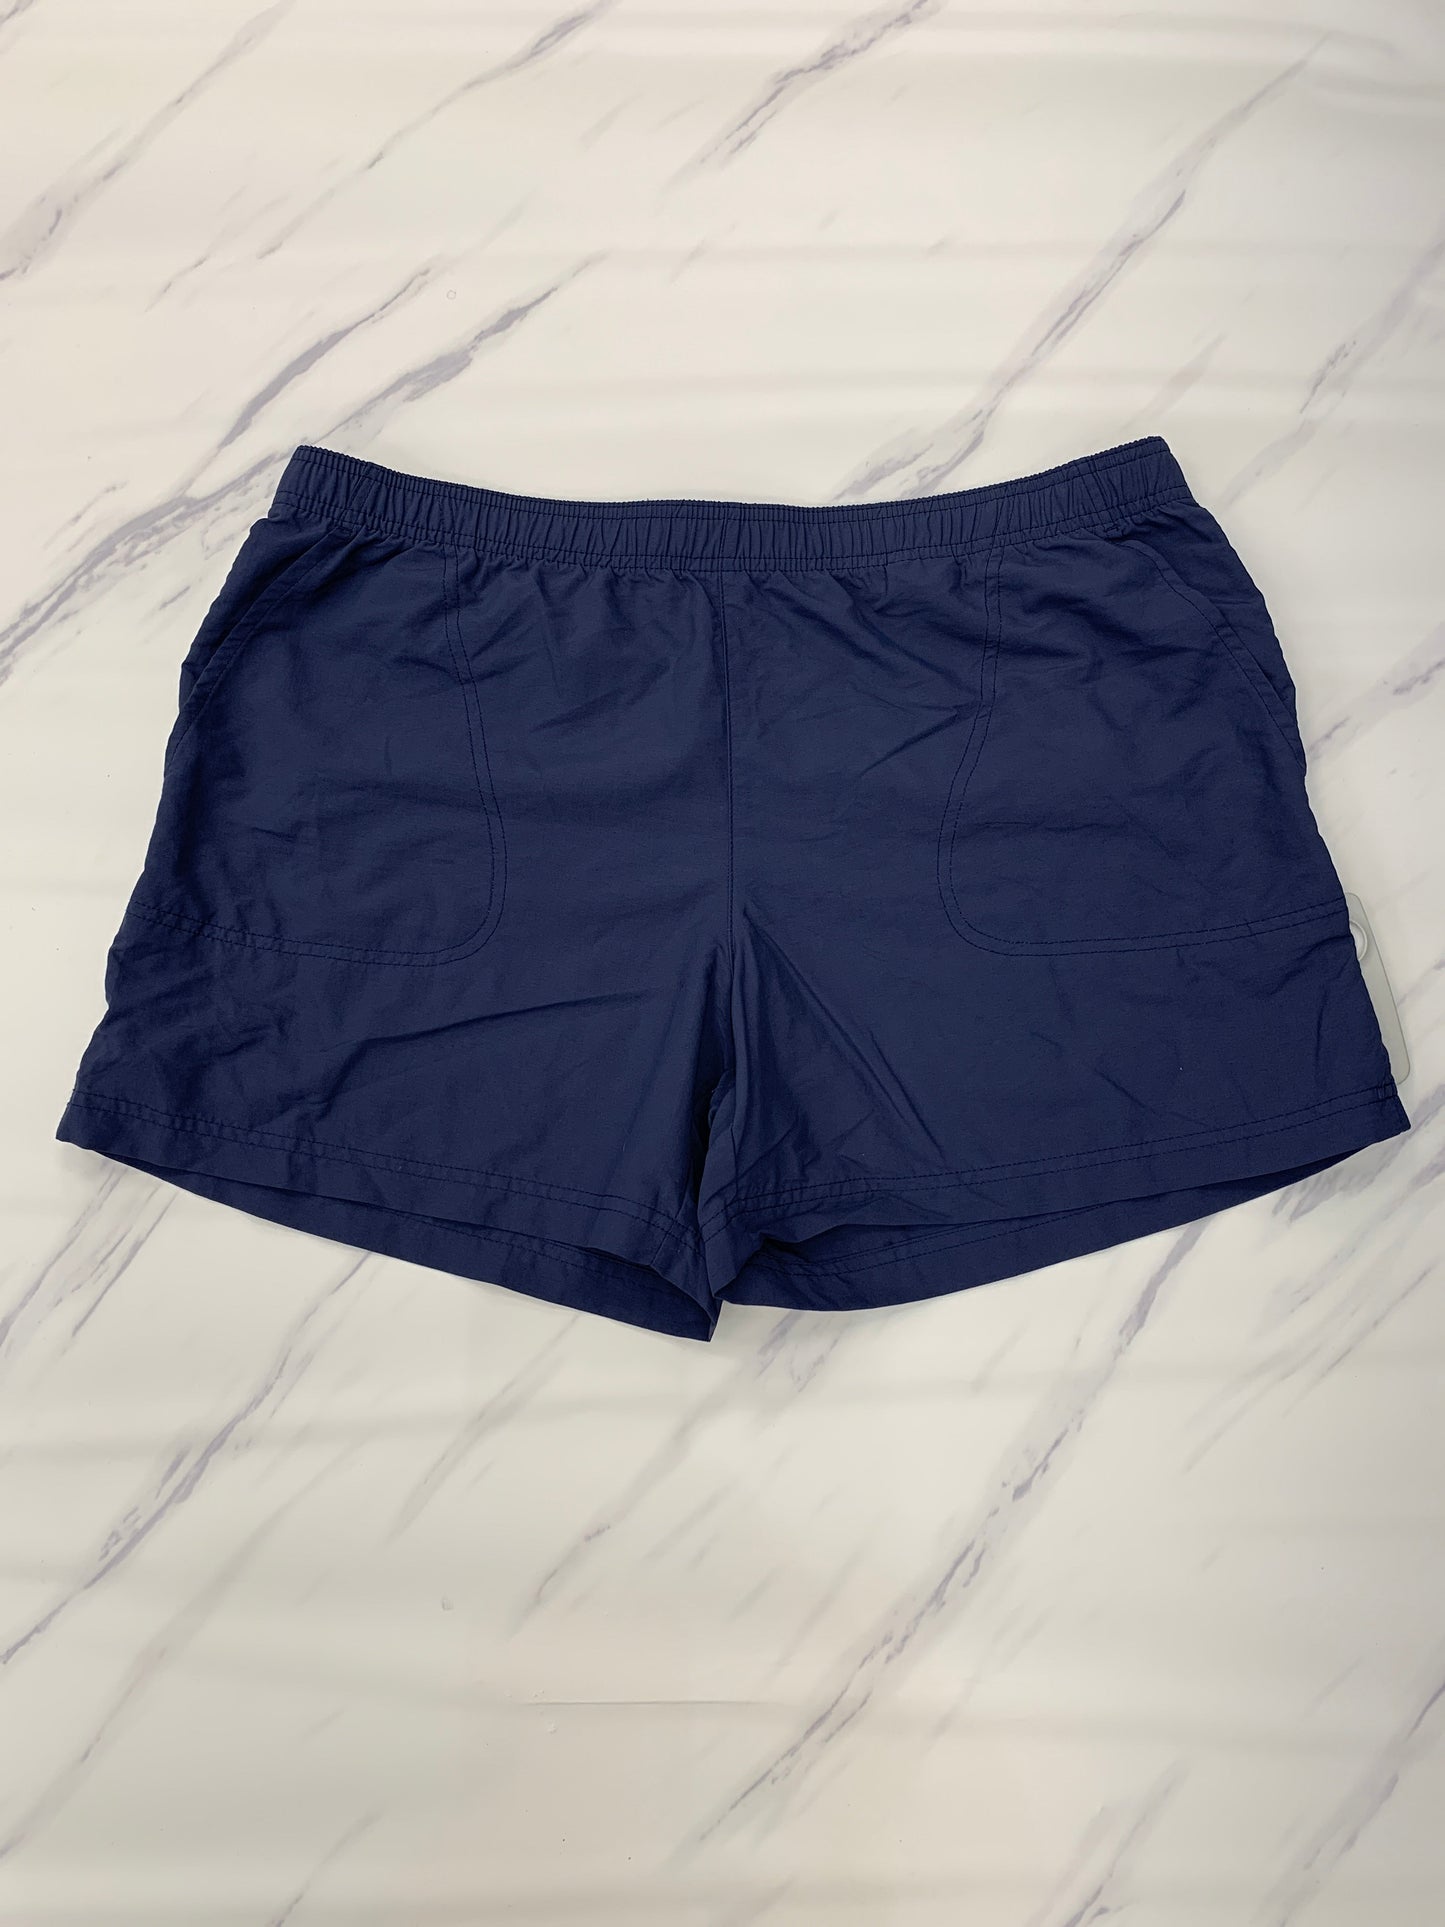 Athletic Shorts Columbia, Size Xl